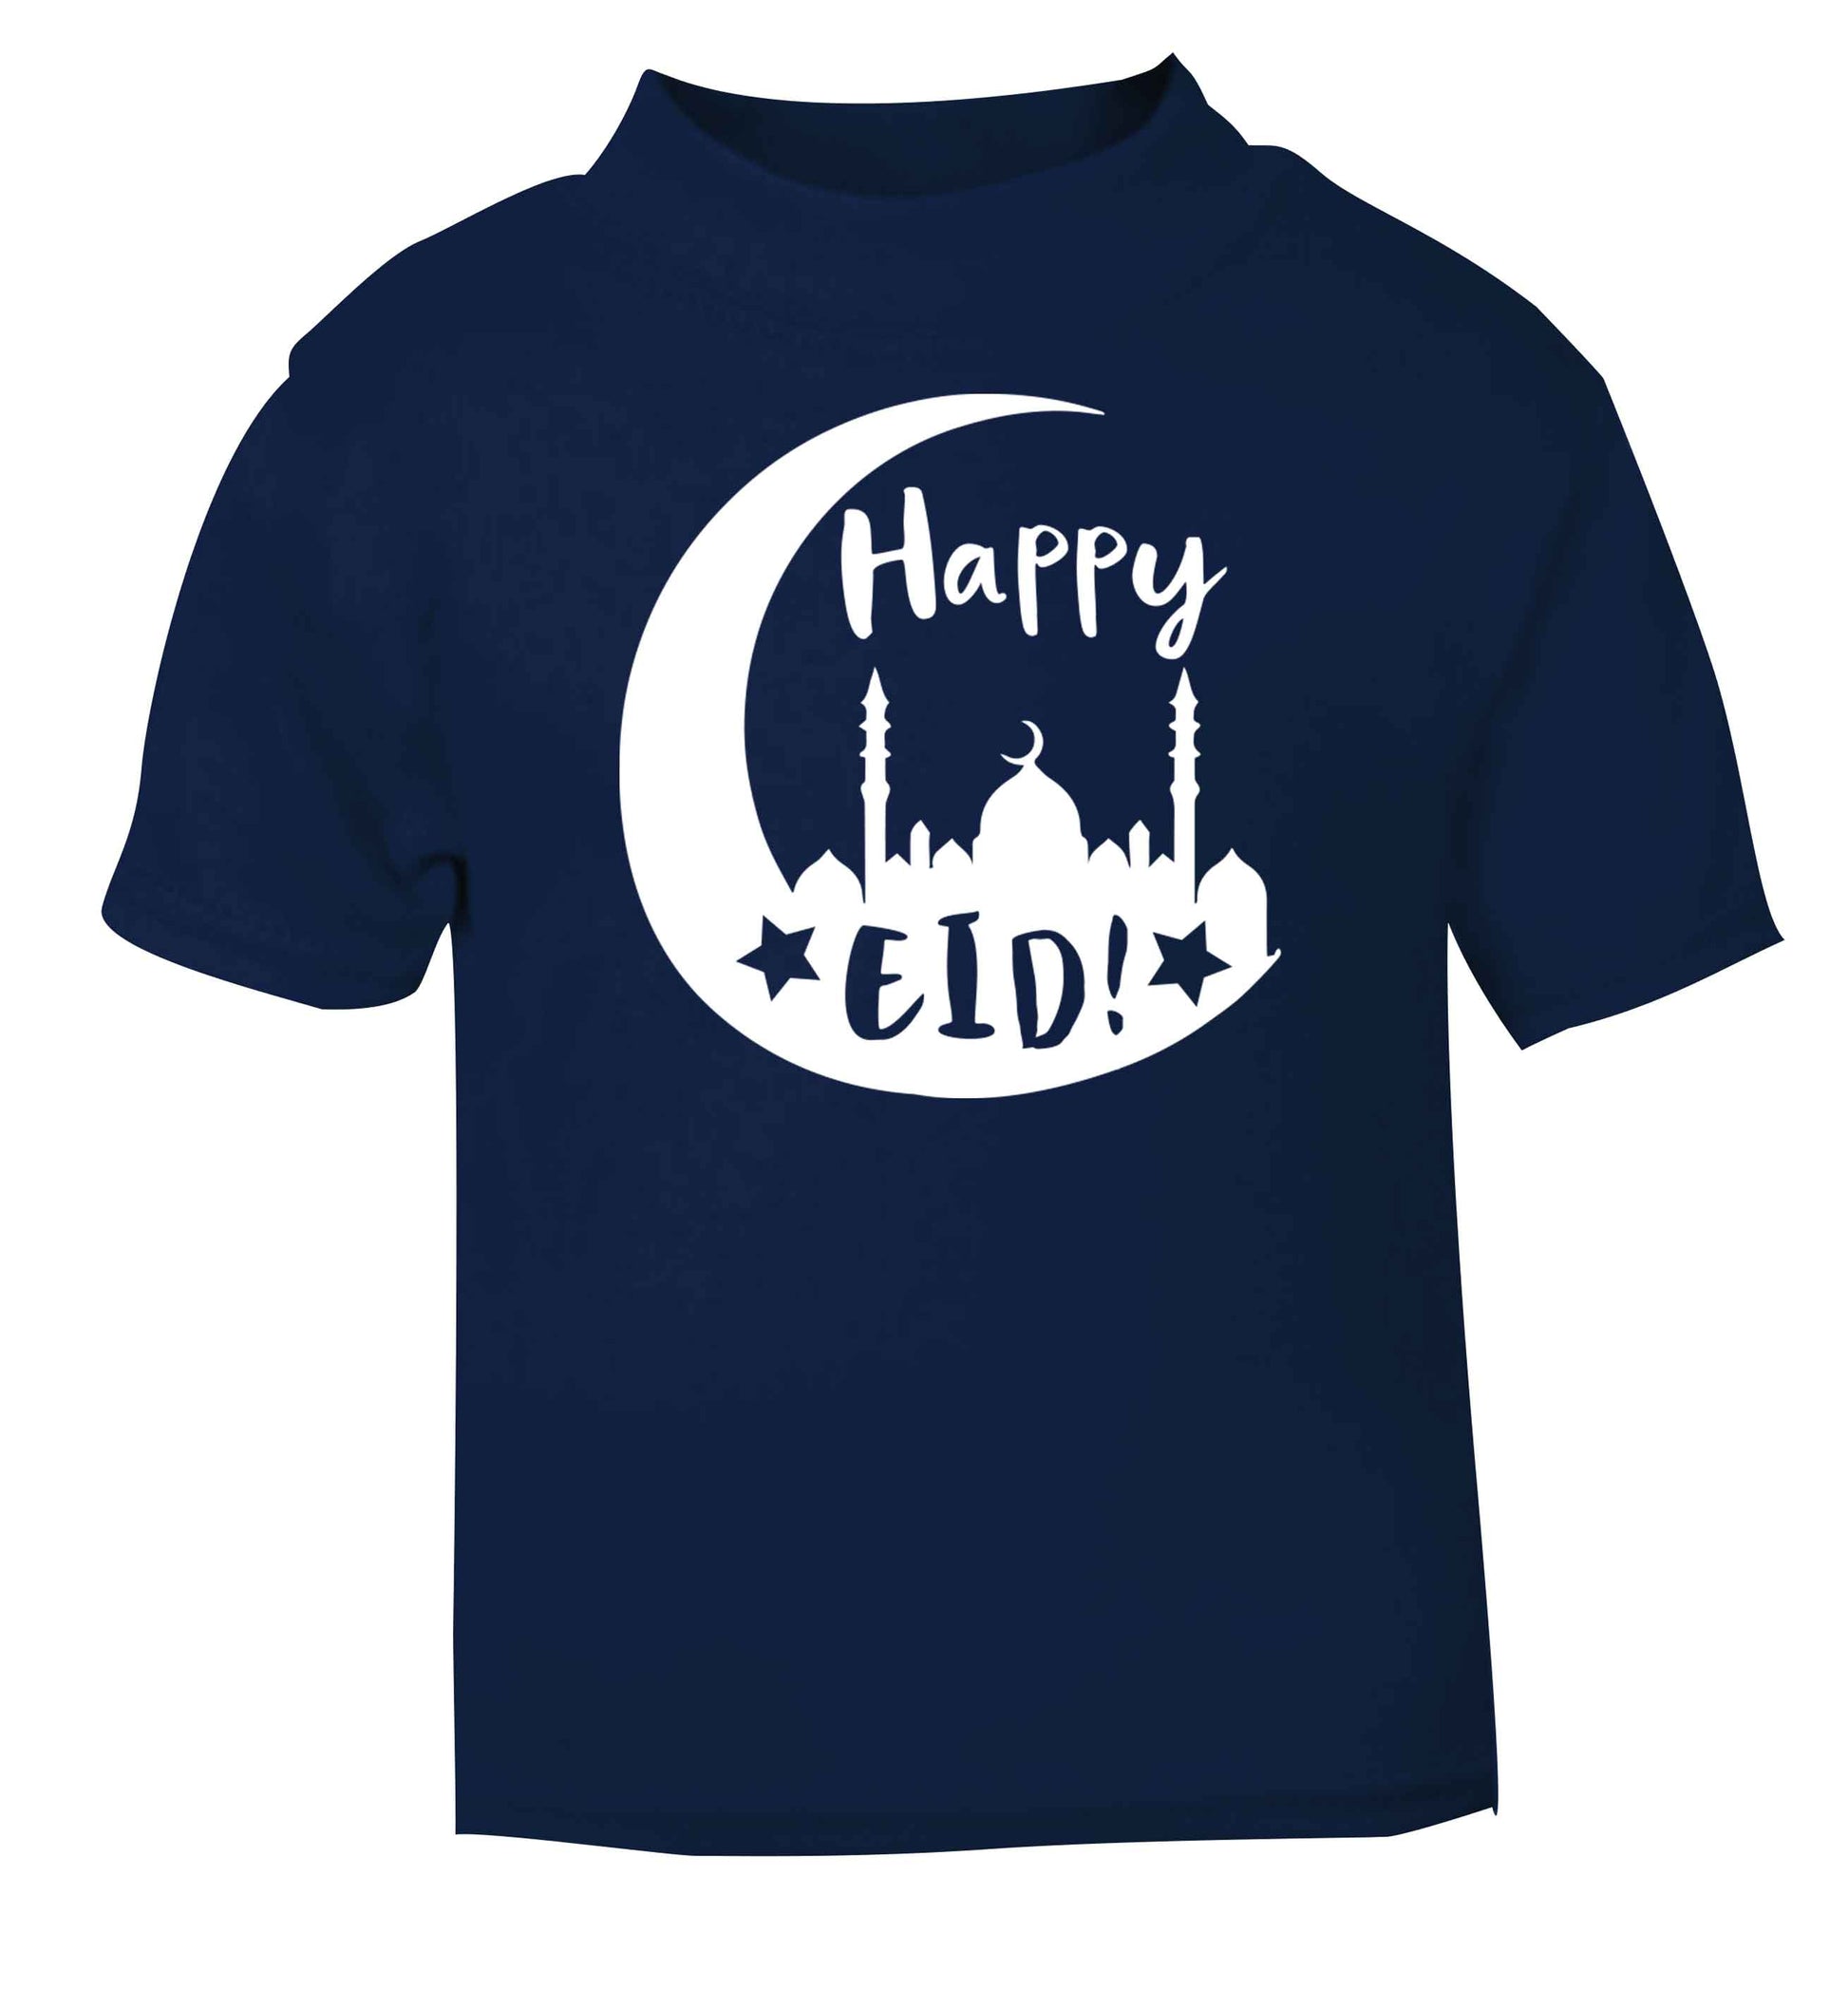 Happy Eid navy baby toddler Tshirt 2 Years